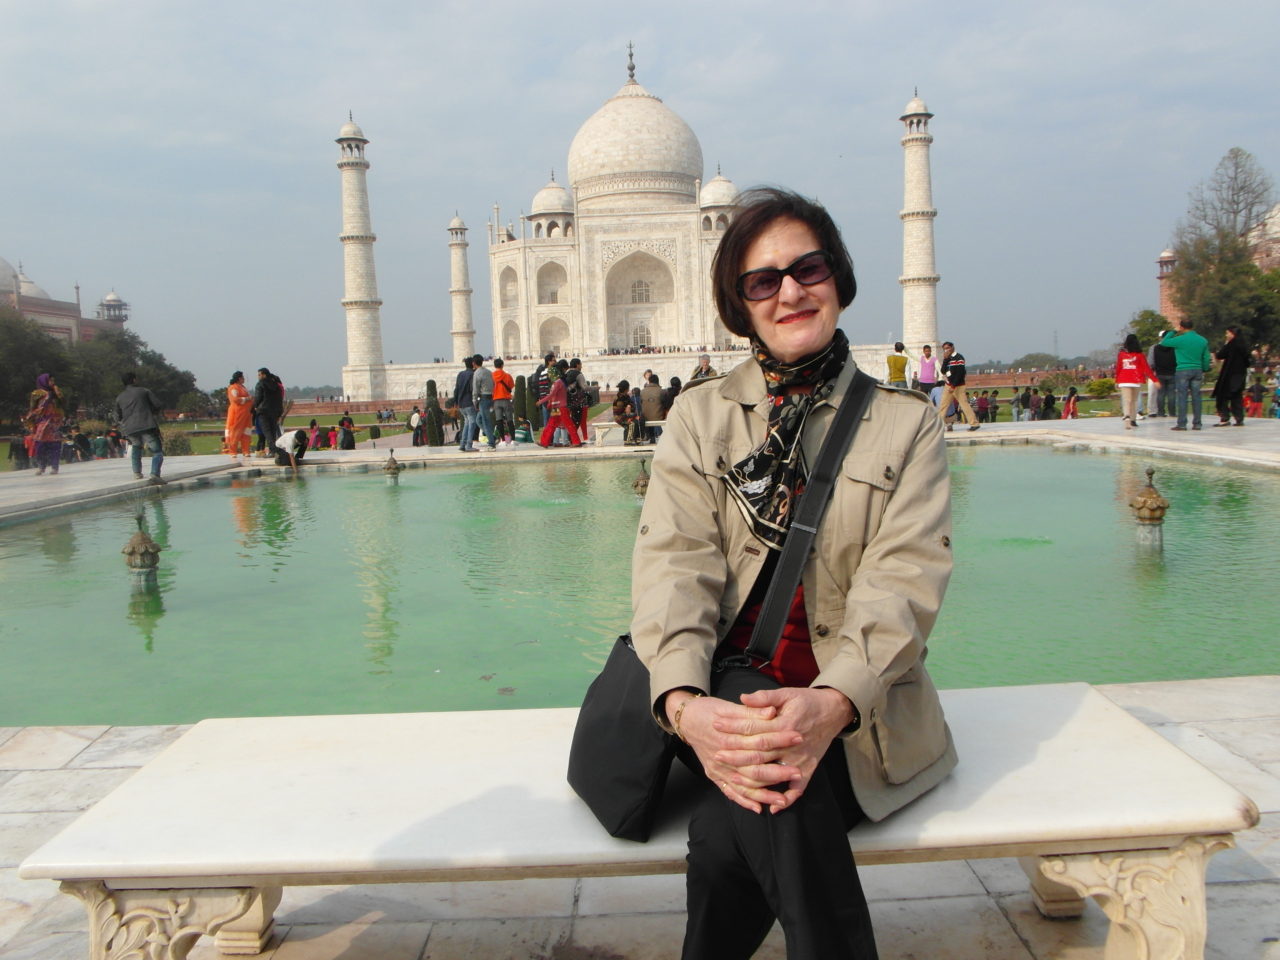 Lynn at the Taj Mahal in Agra, India ~ The Art of Travel Preparation